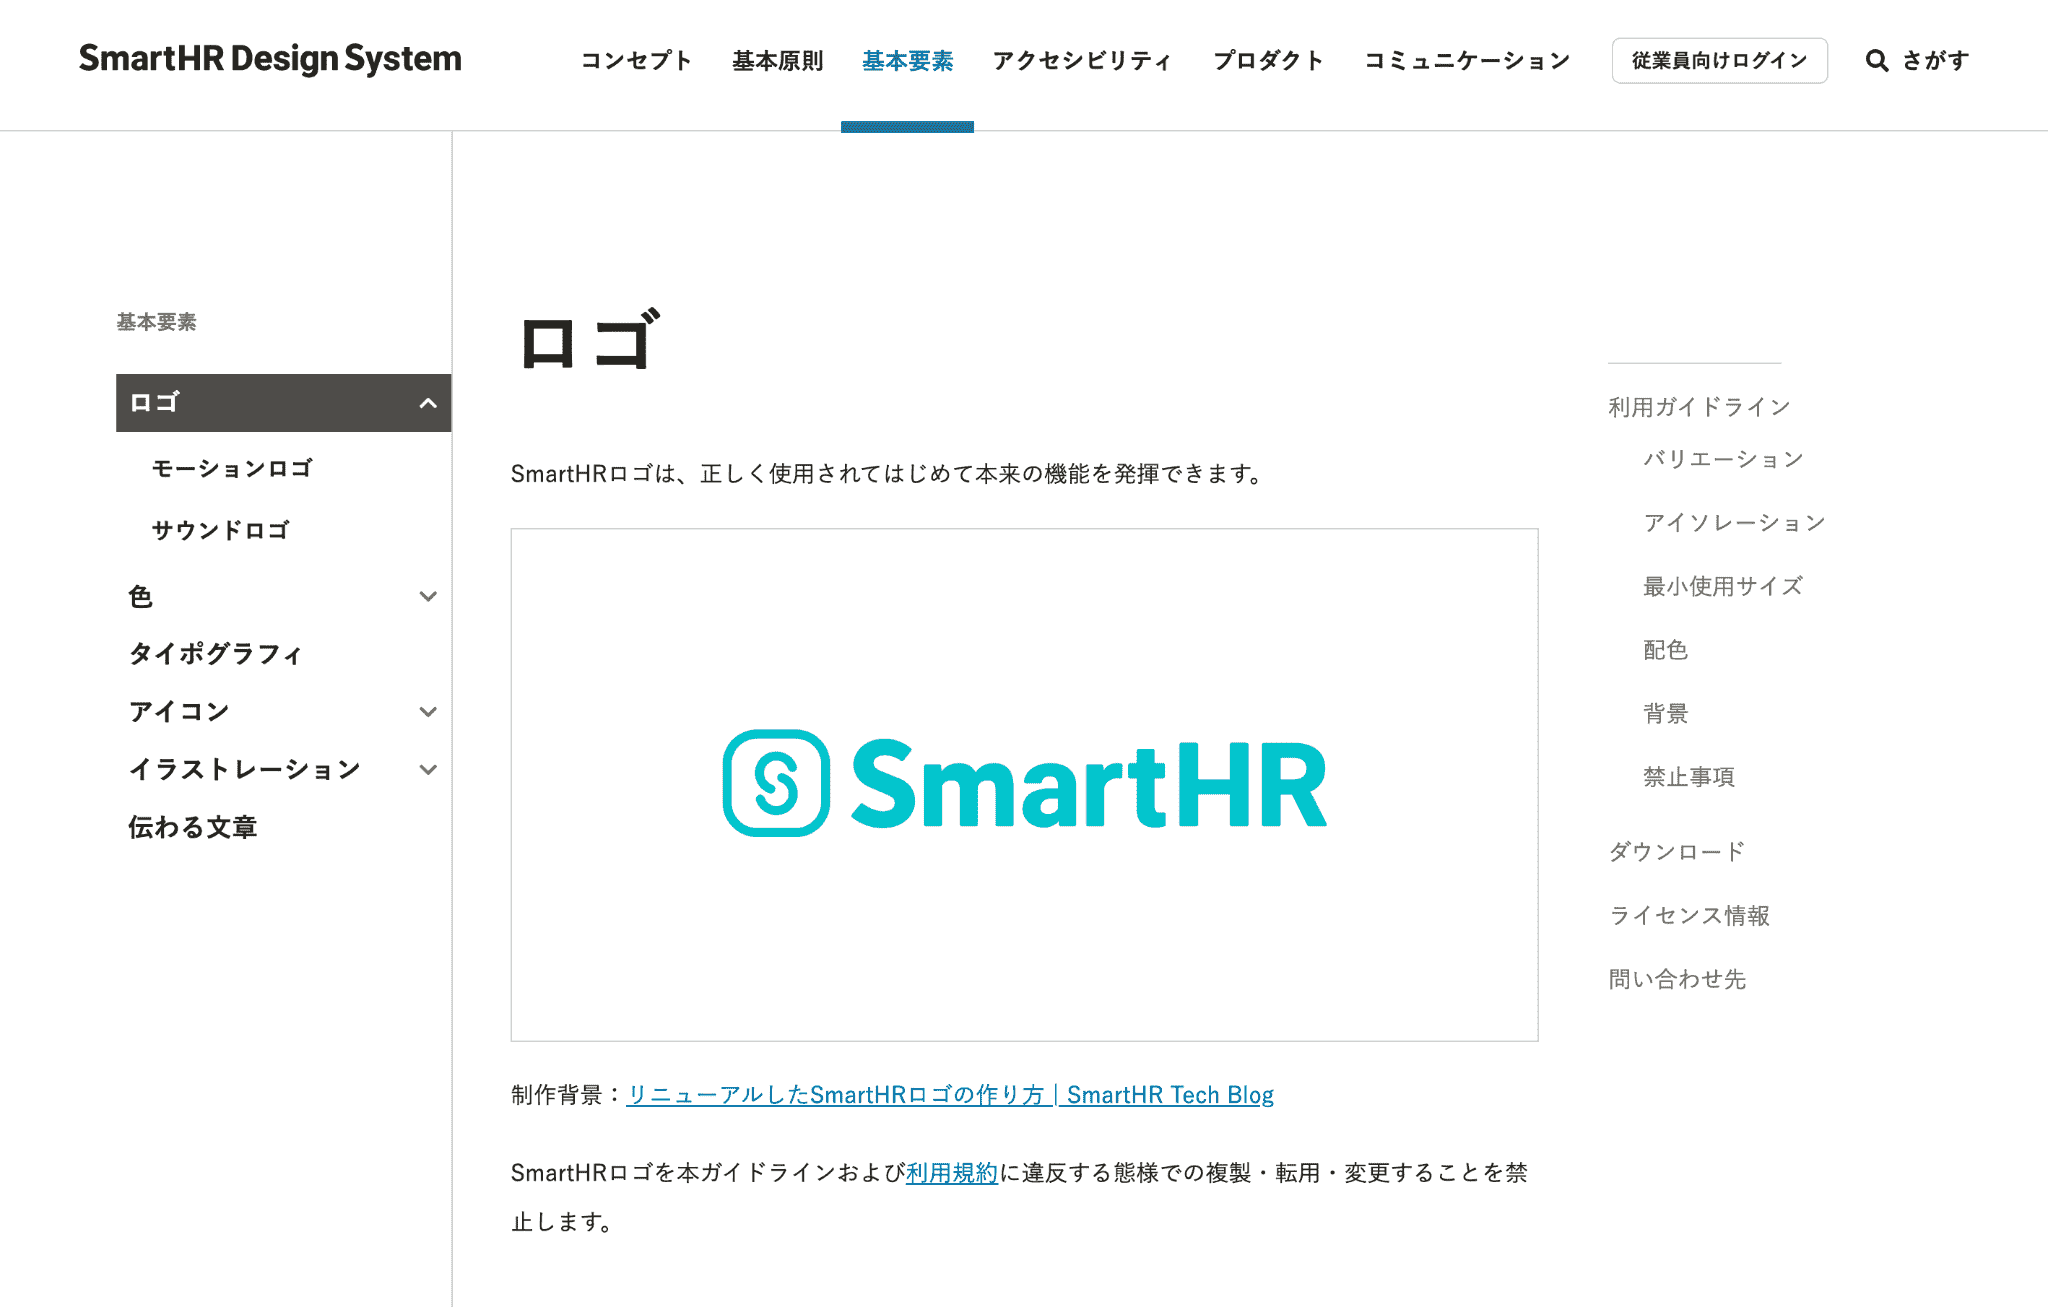 SmartHR Design System